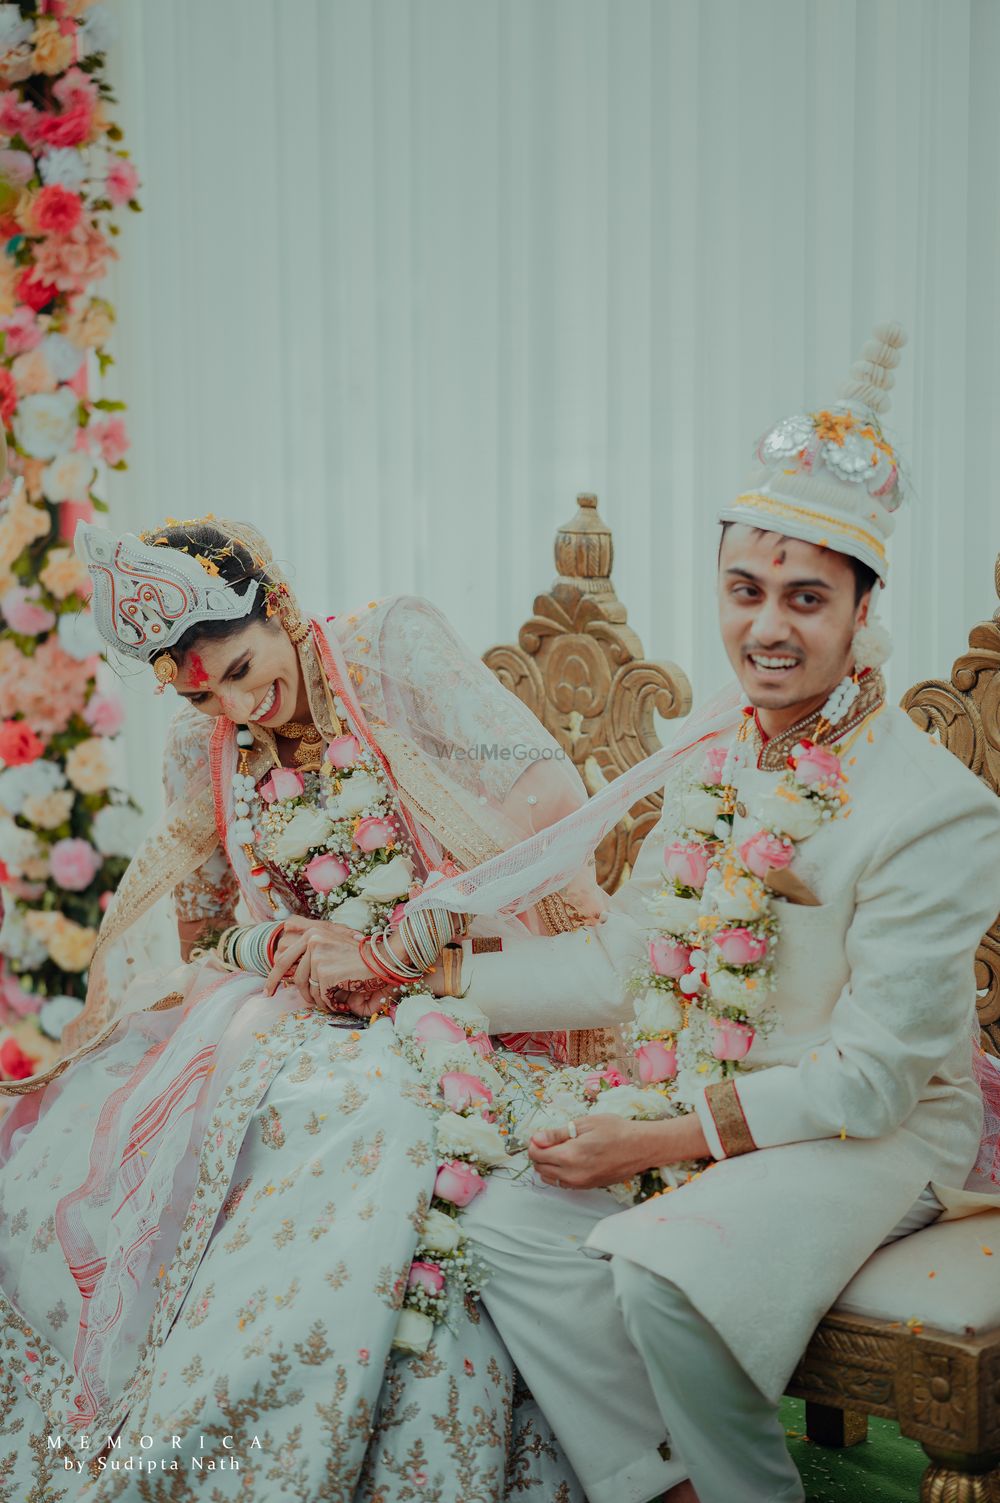 Photo From Nikita & Alistair (Wedding) - By Memorica by Sudipta Nath